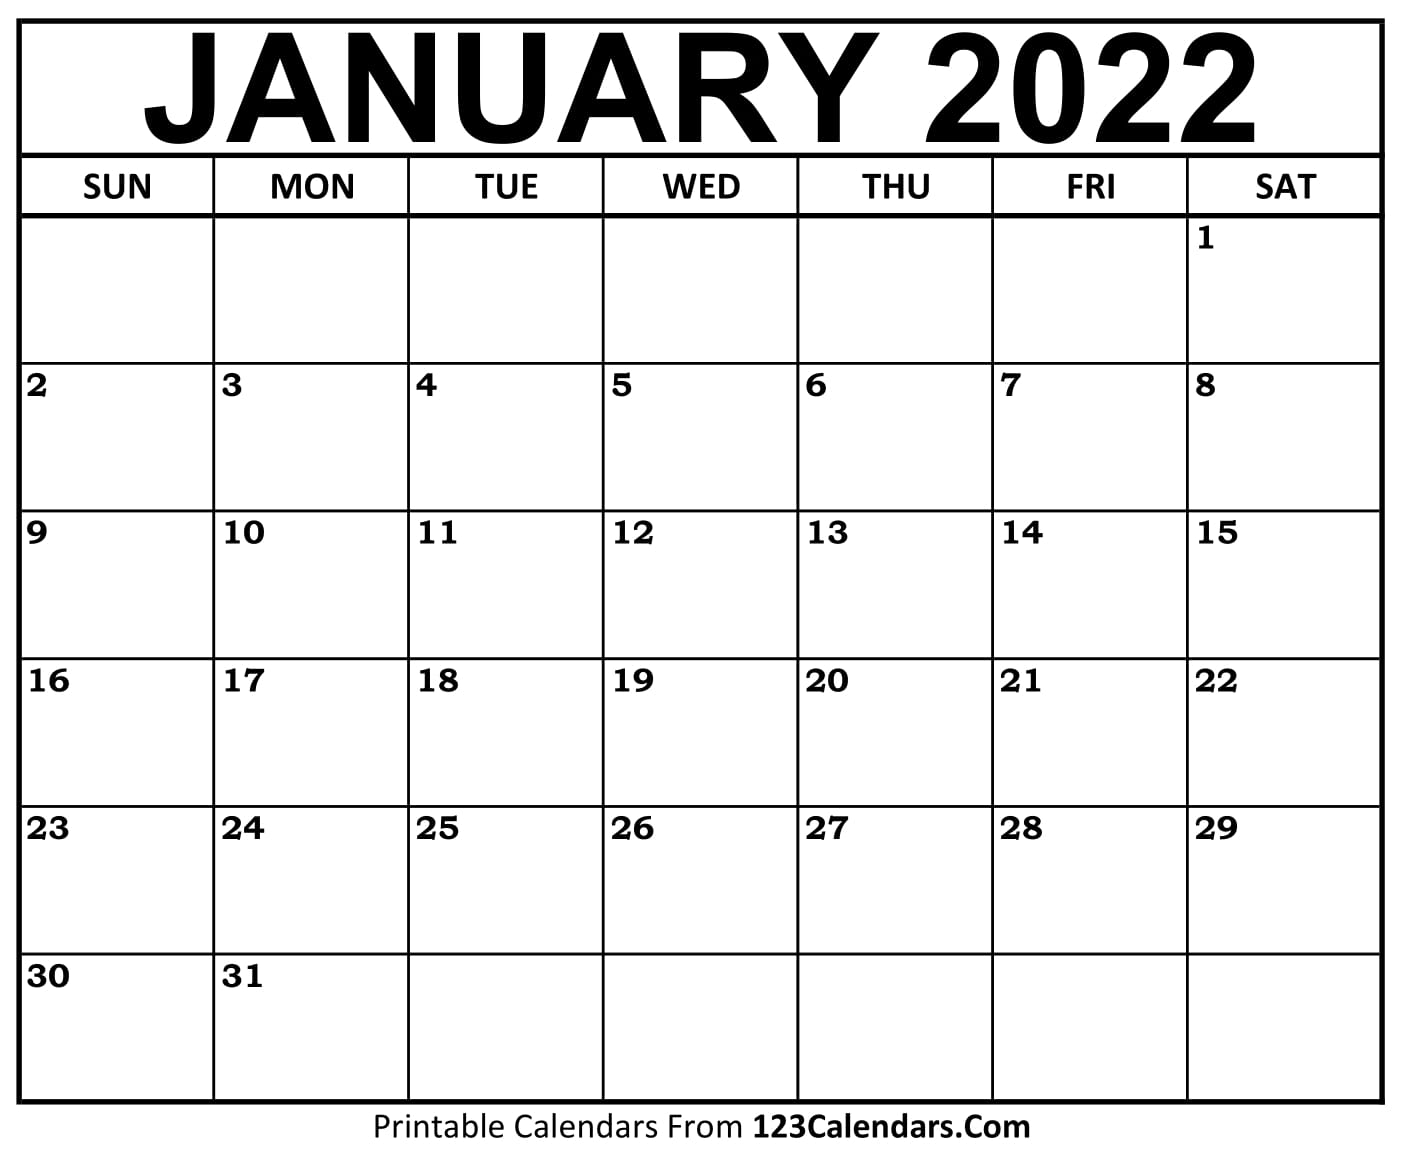 Print A Calendar January 2022 Printable January 2022 Calendar Templates - 123Calendars.com